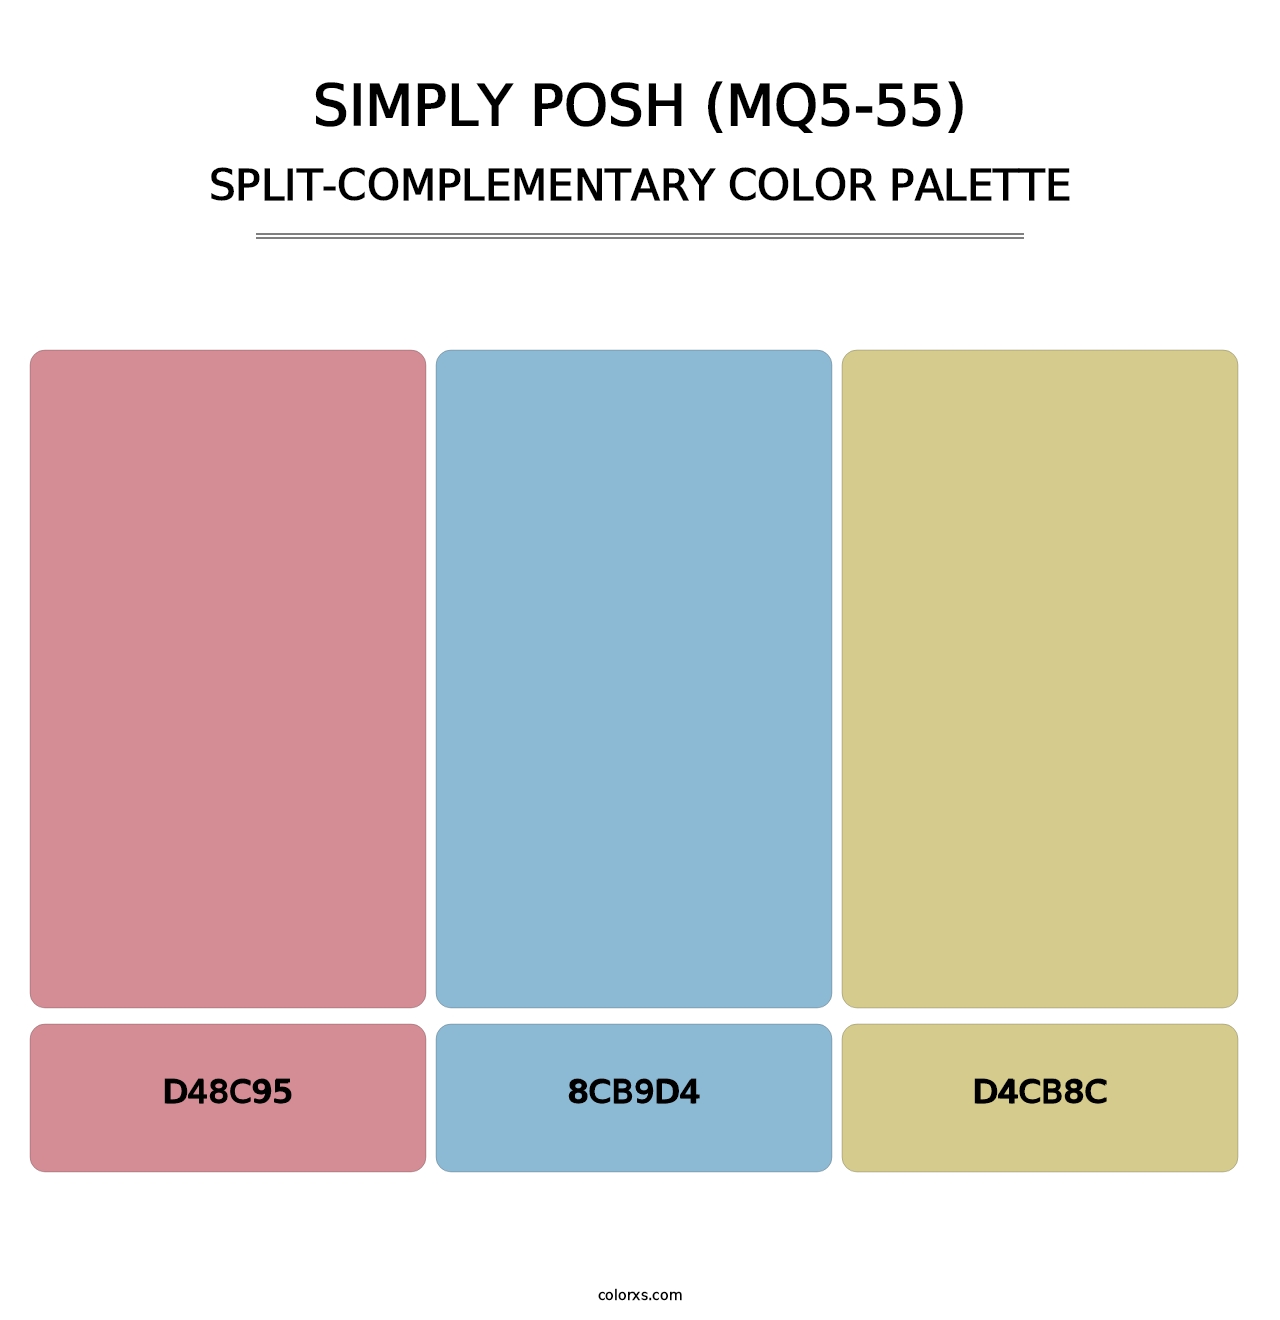 Simply Posh (MQ5-55) - Split-Complementary Color Palette